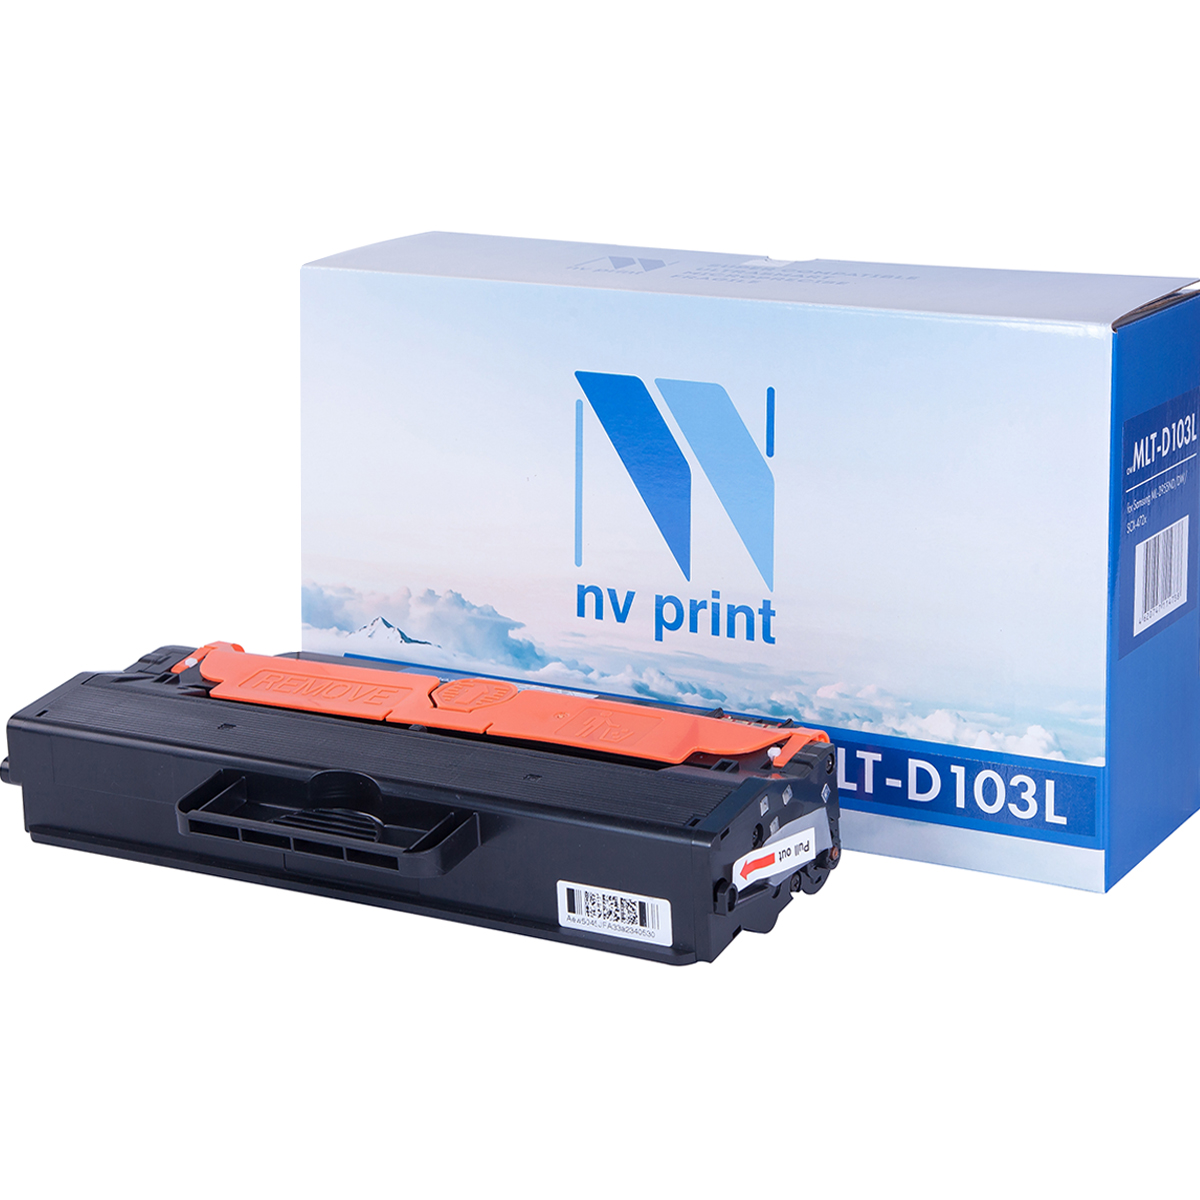 Фото - Картридж NV Print MLT-D101S для Samsung SCX 3400/ML 2160 (1500k) картридж colortek samsung mlt d101s